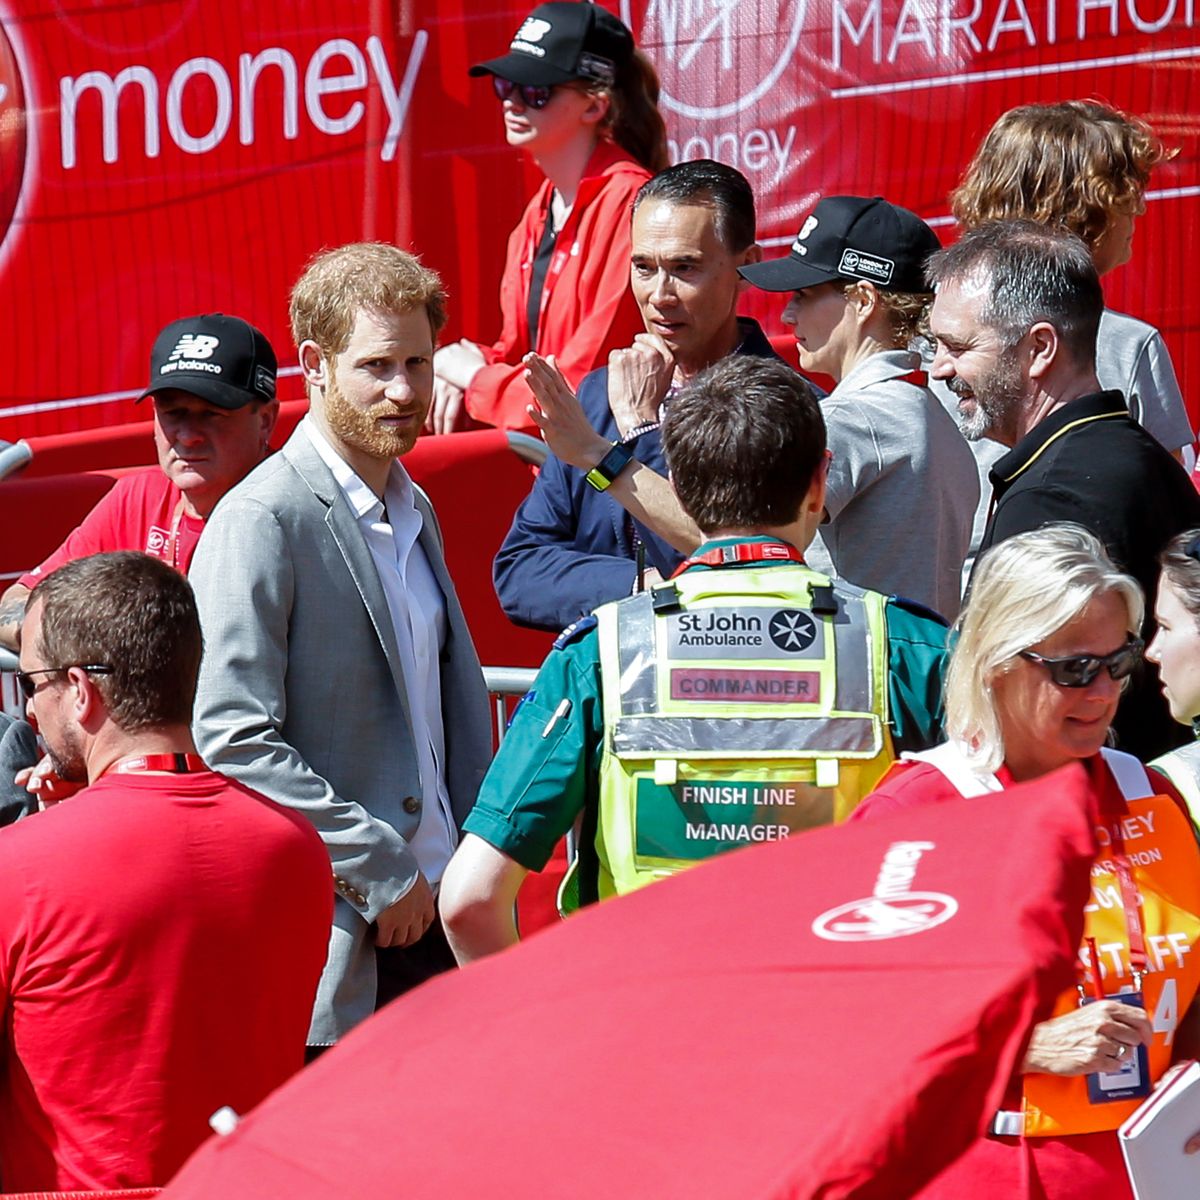 Prince Harry at London Marathon 2018